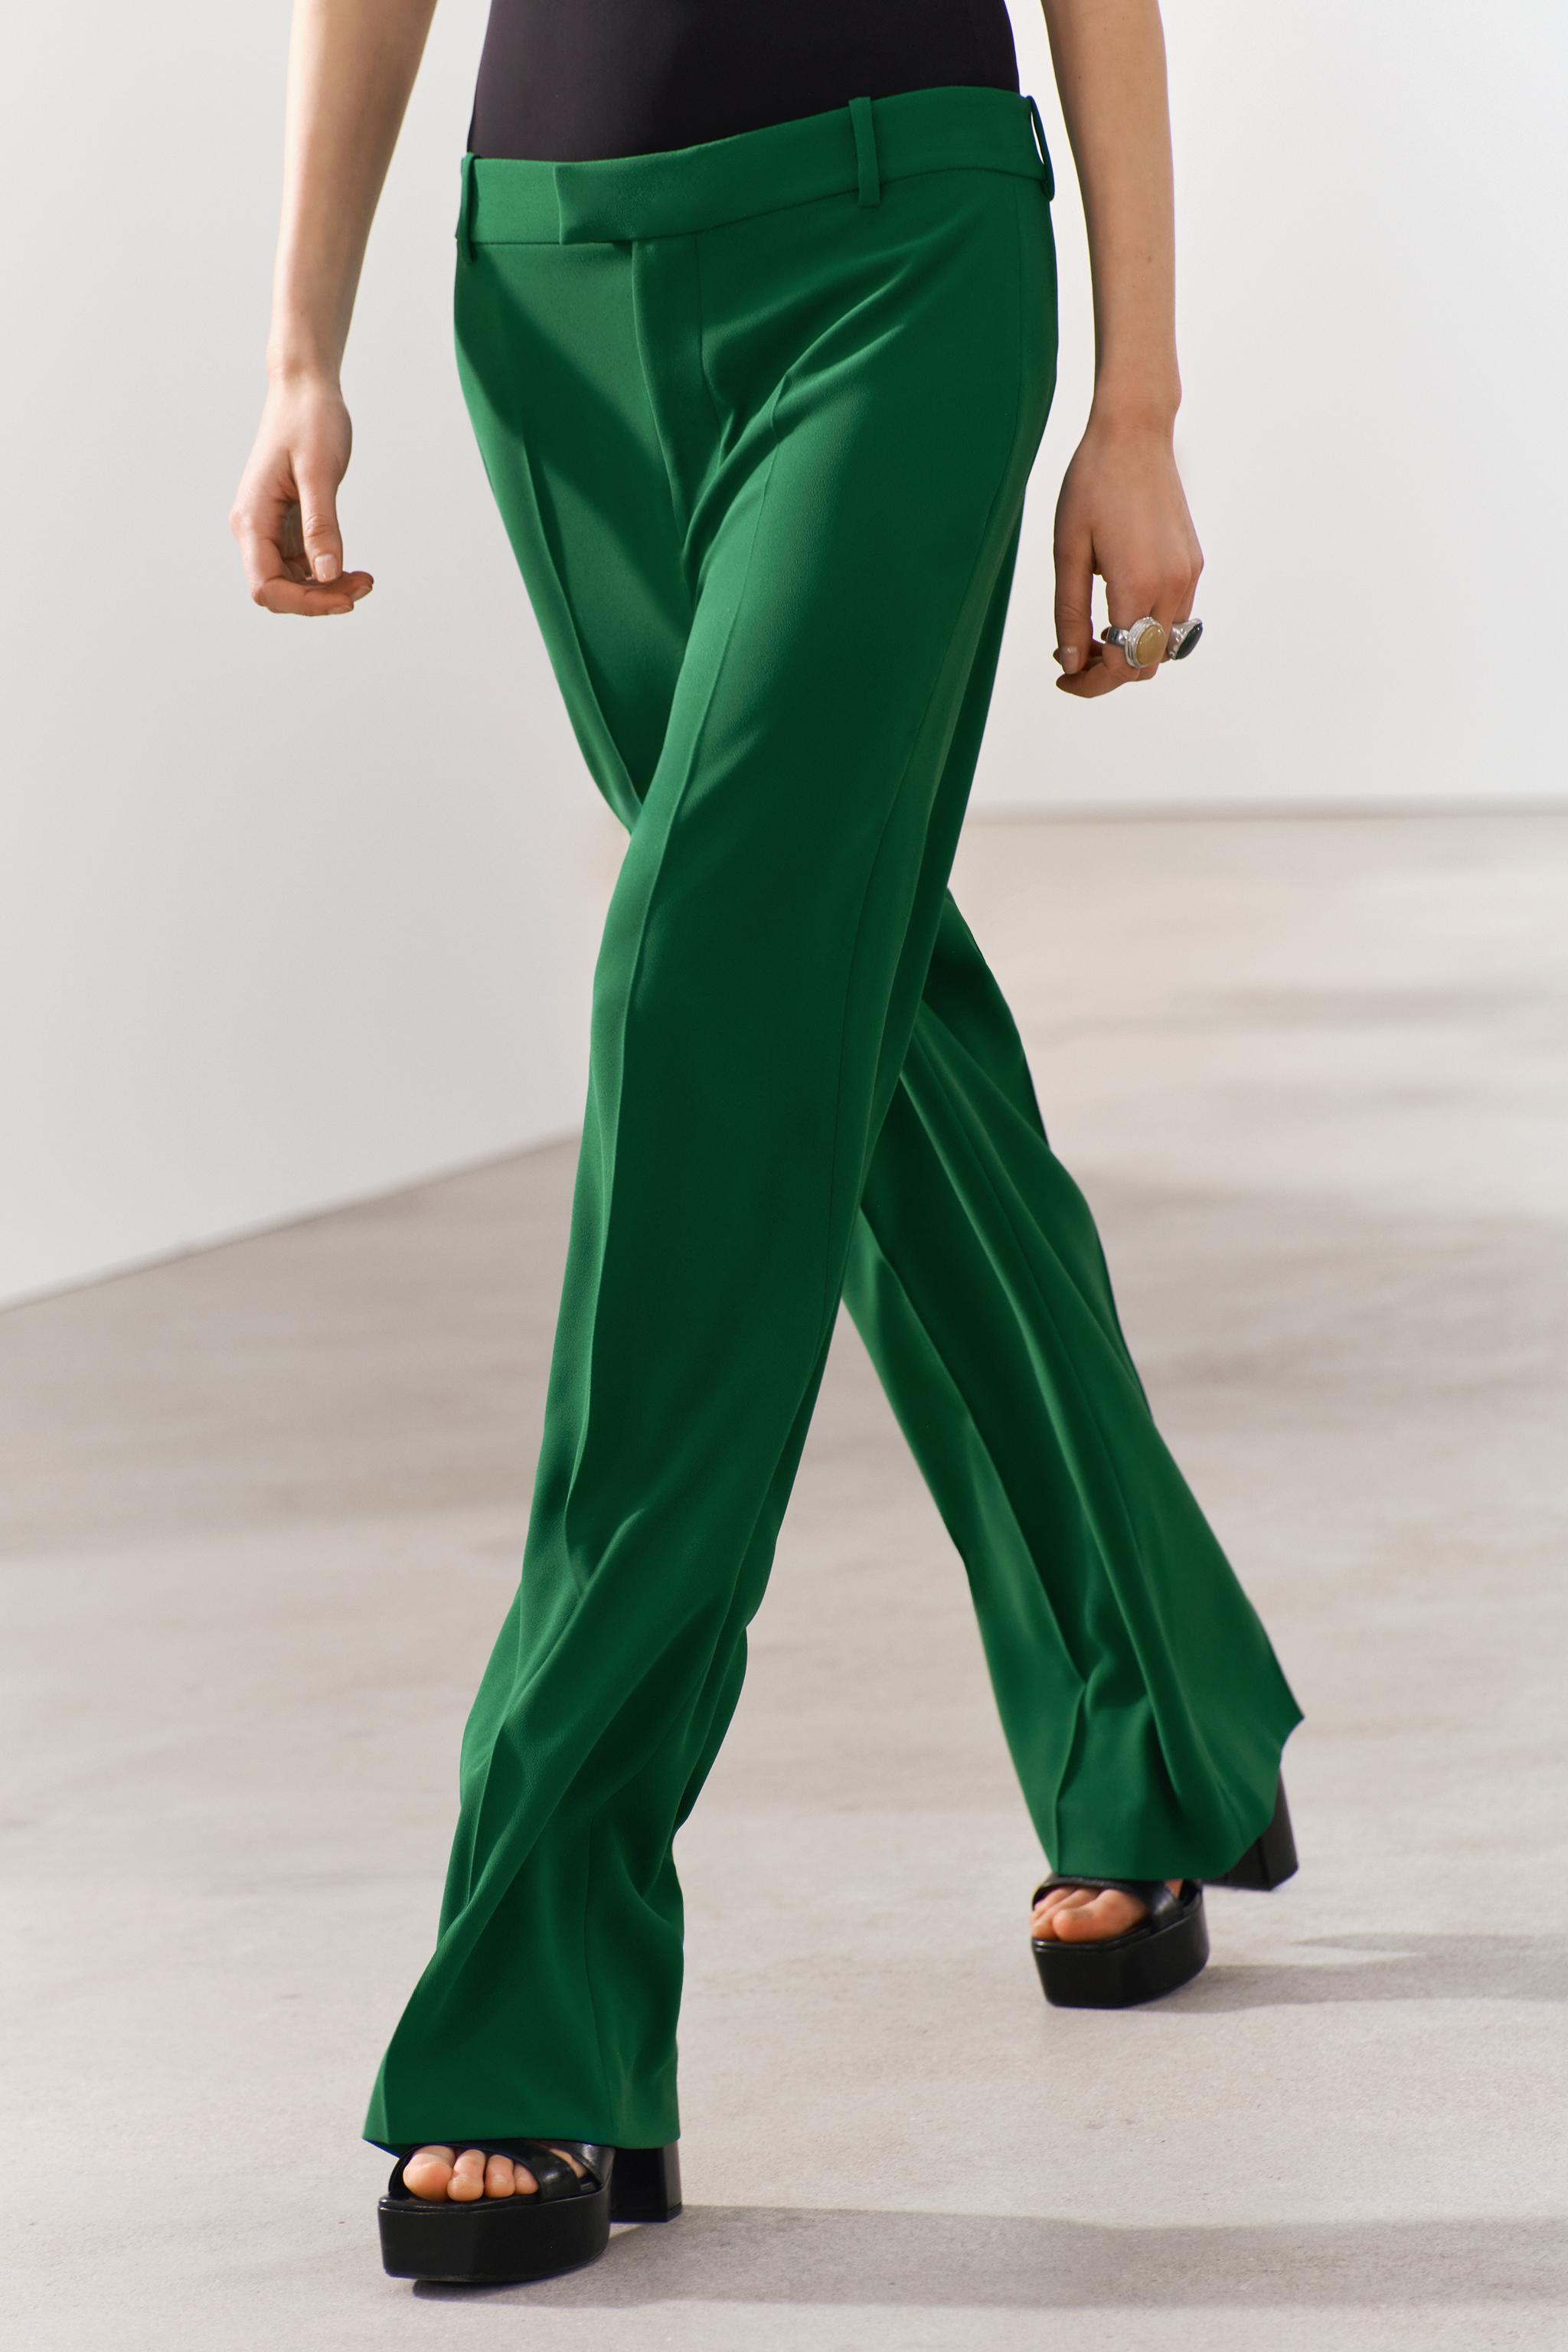 Zara, Pants & Jumpsuits, Zara Full Length Francoise Green Pants Bloggers  Favorite Sizi S Nwt